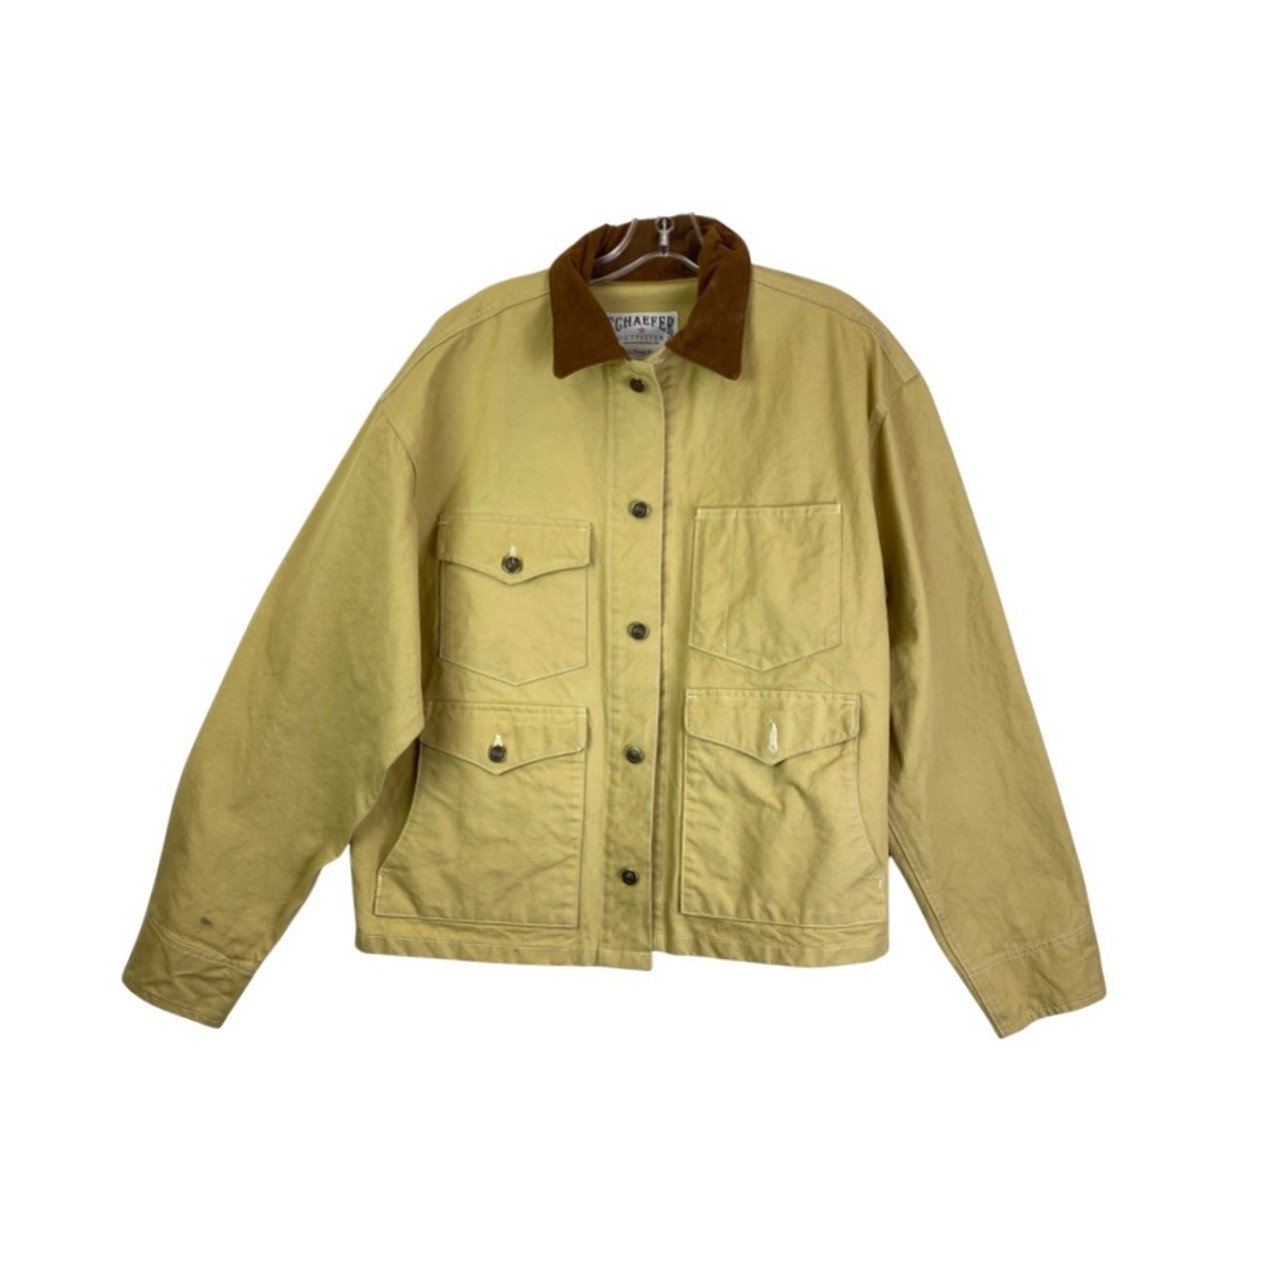 Schaefer Outfitter Beige Cotton Canvas Chore Jacket